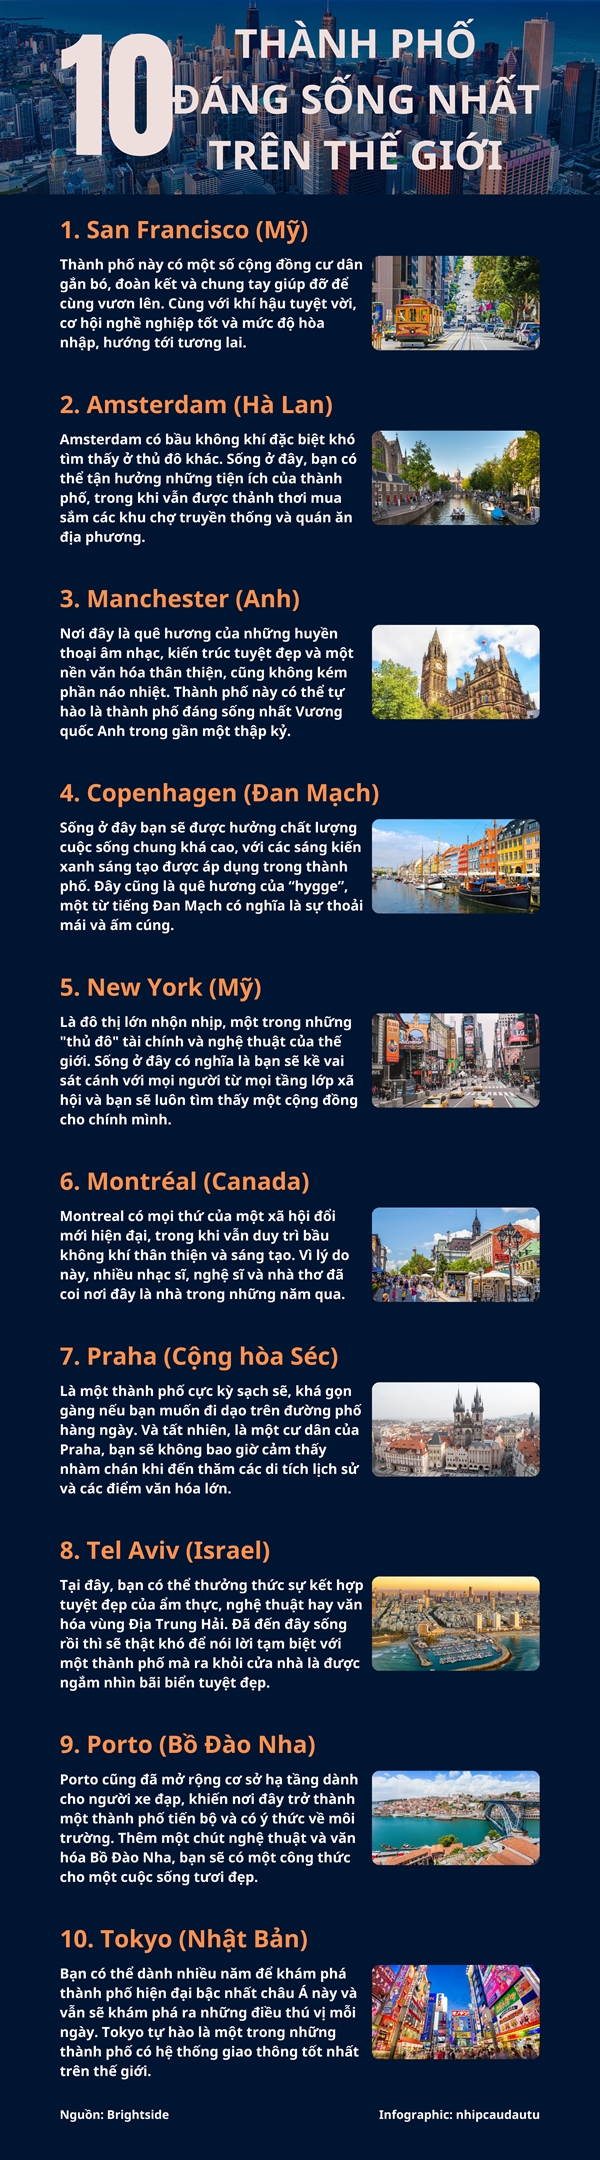 [Infographic] Top10 thanh pho duoc binh chon la noi dang song nhat tren the gioi